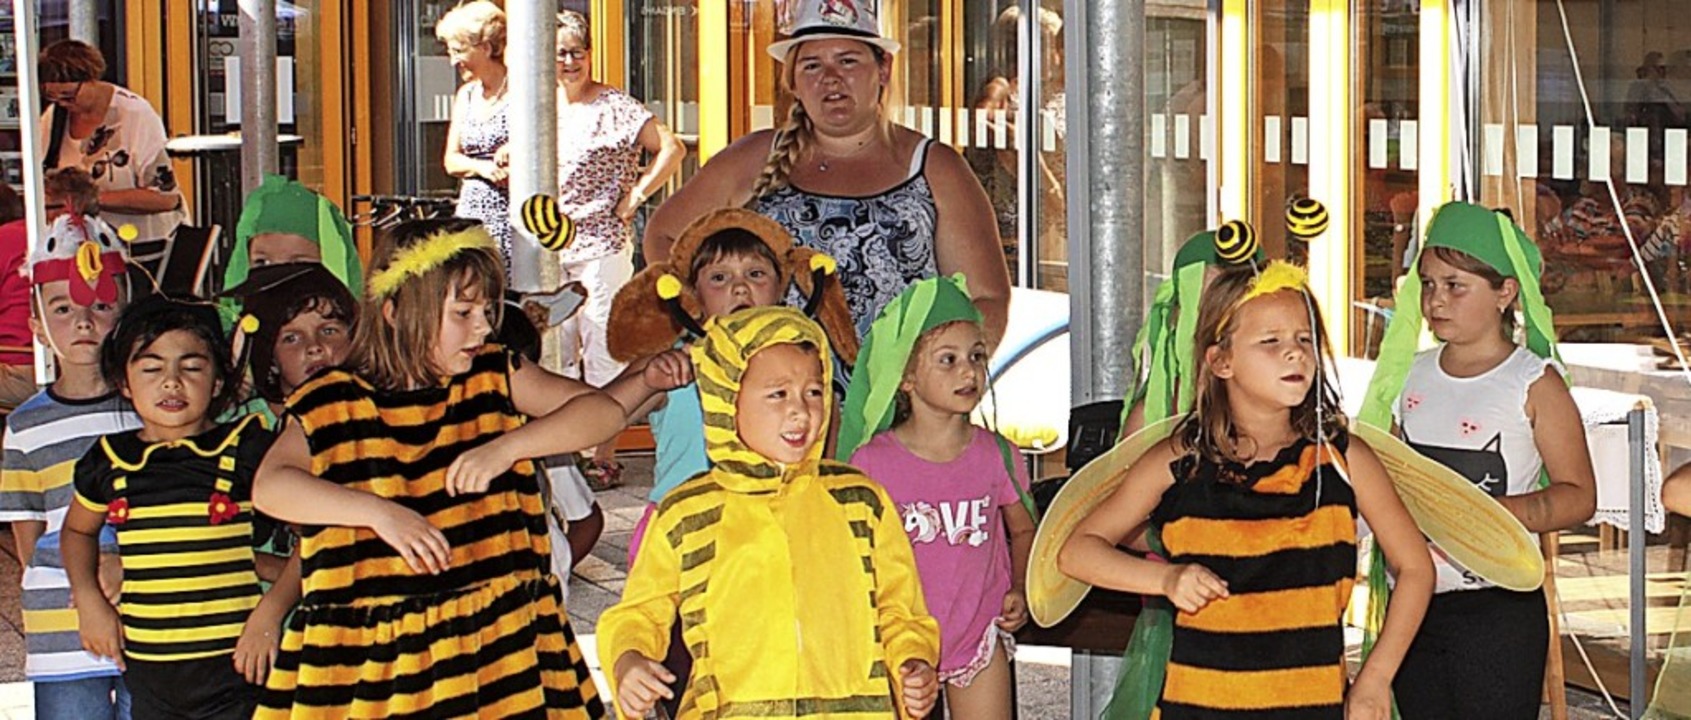 Zeller Kinder erfreuten mit dem Bienenlied.  | Foto: Heiner Fabry